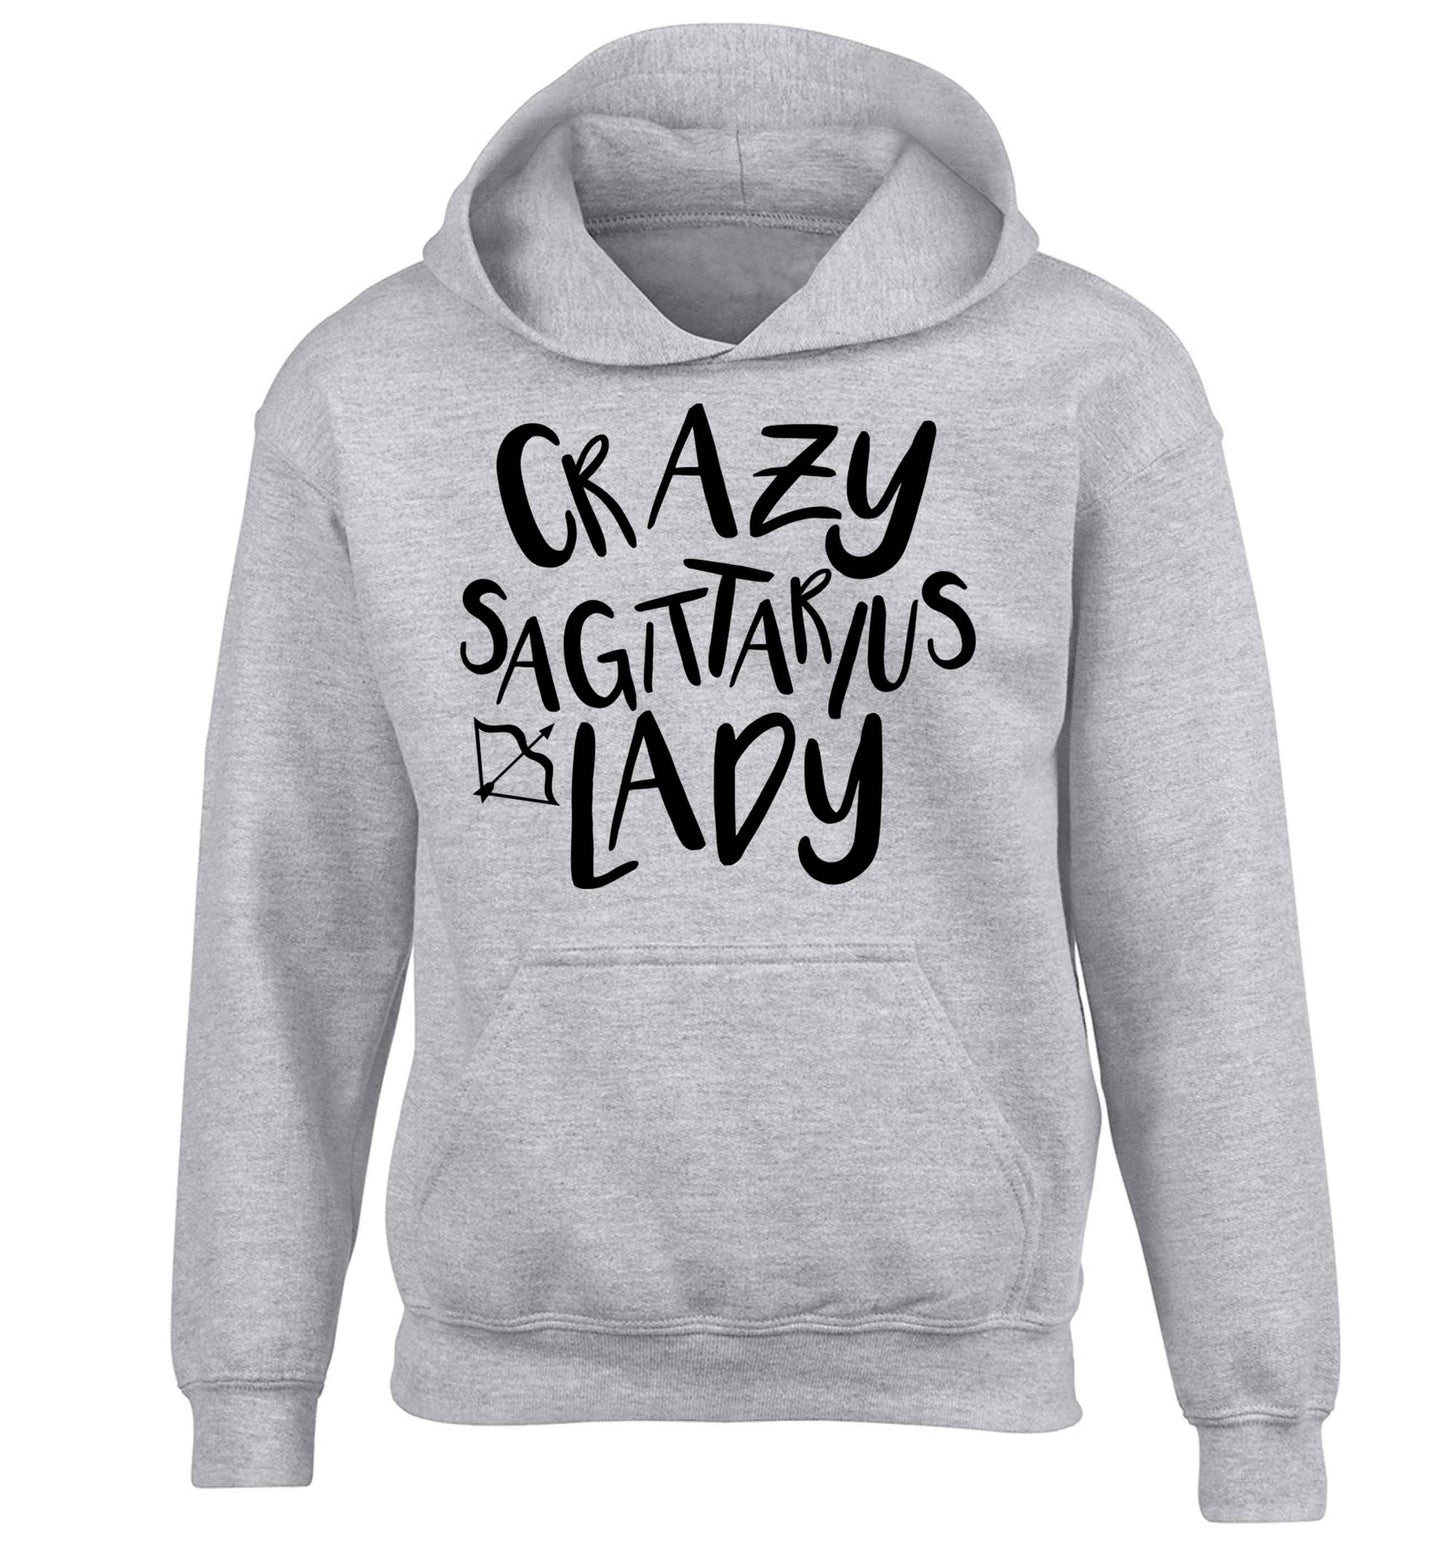 Crazy sagittarius lady children's grey hoodie 12-13 Years